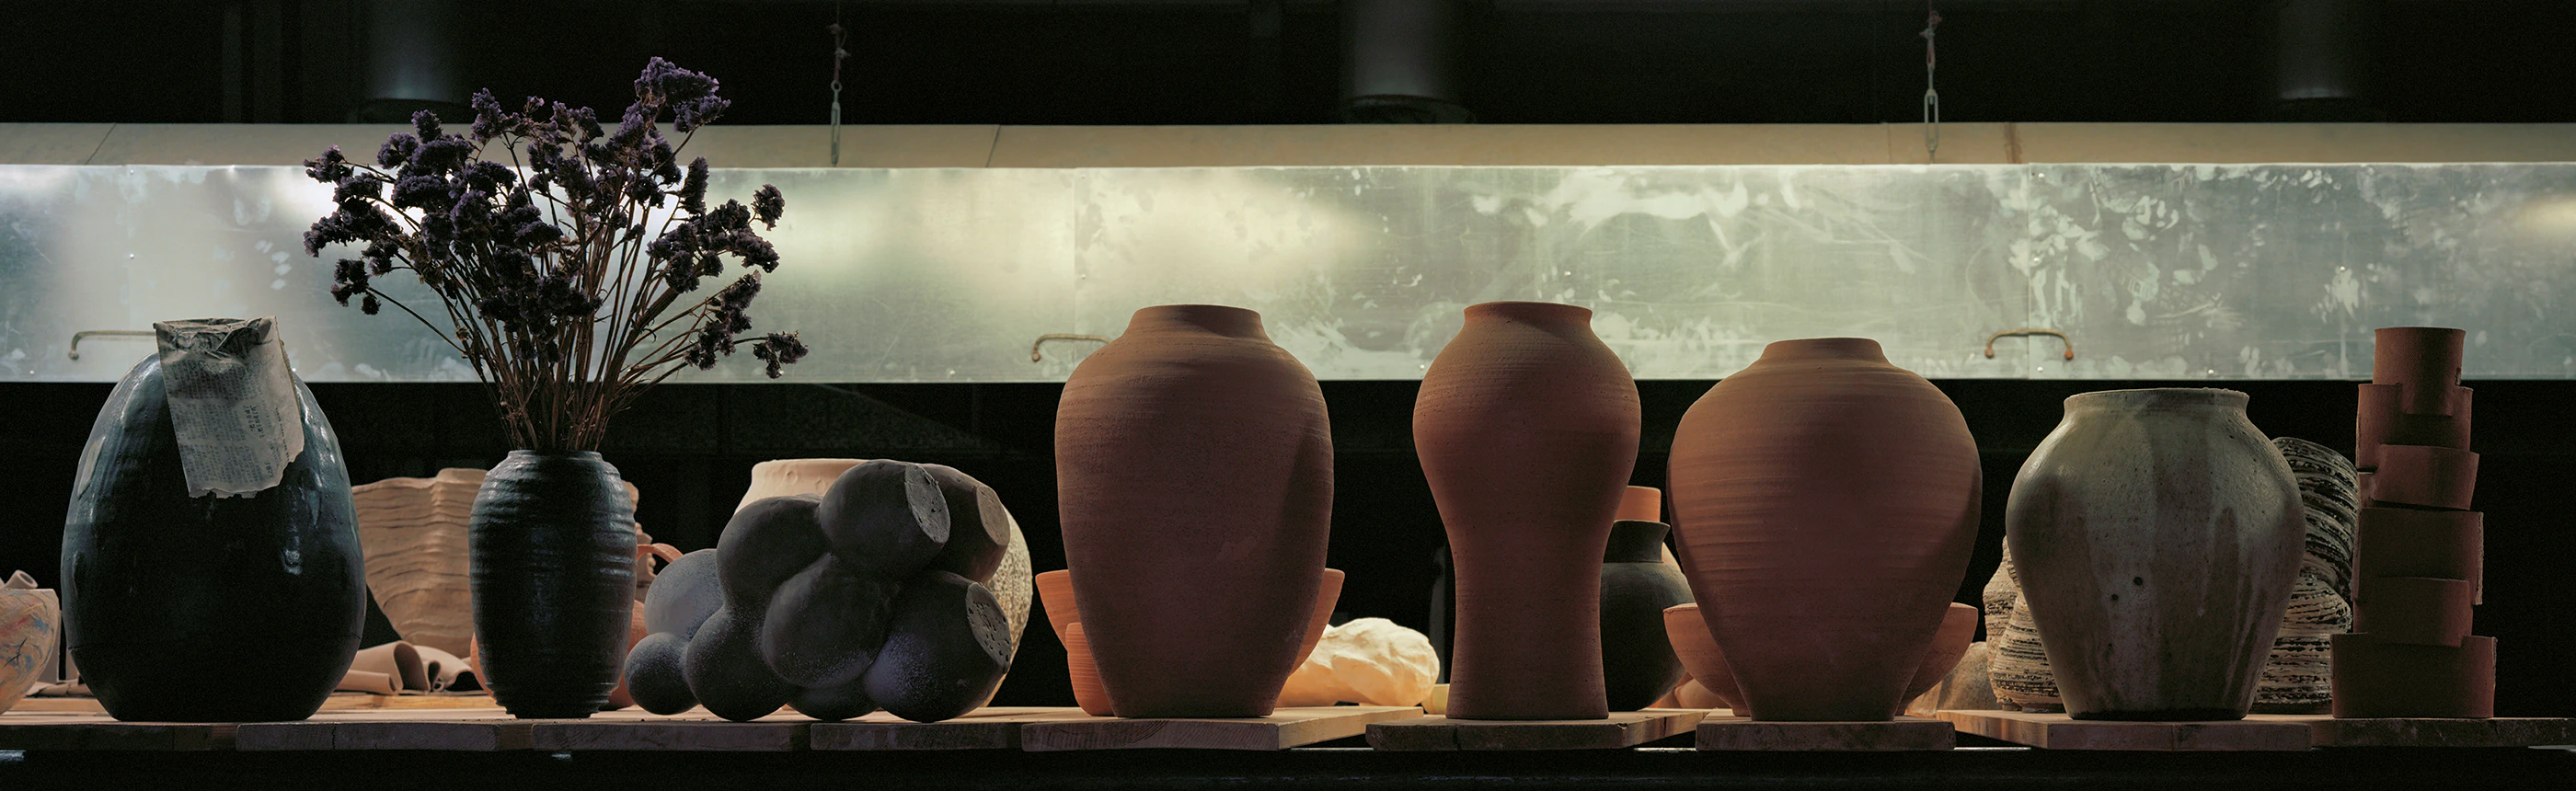 Ceramic Art and Design Lab, Tsinghua University II